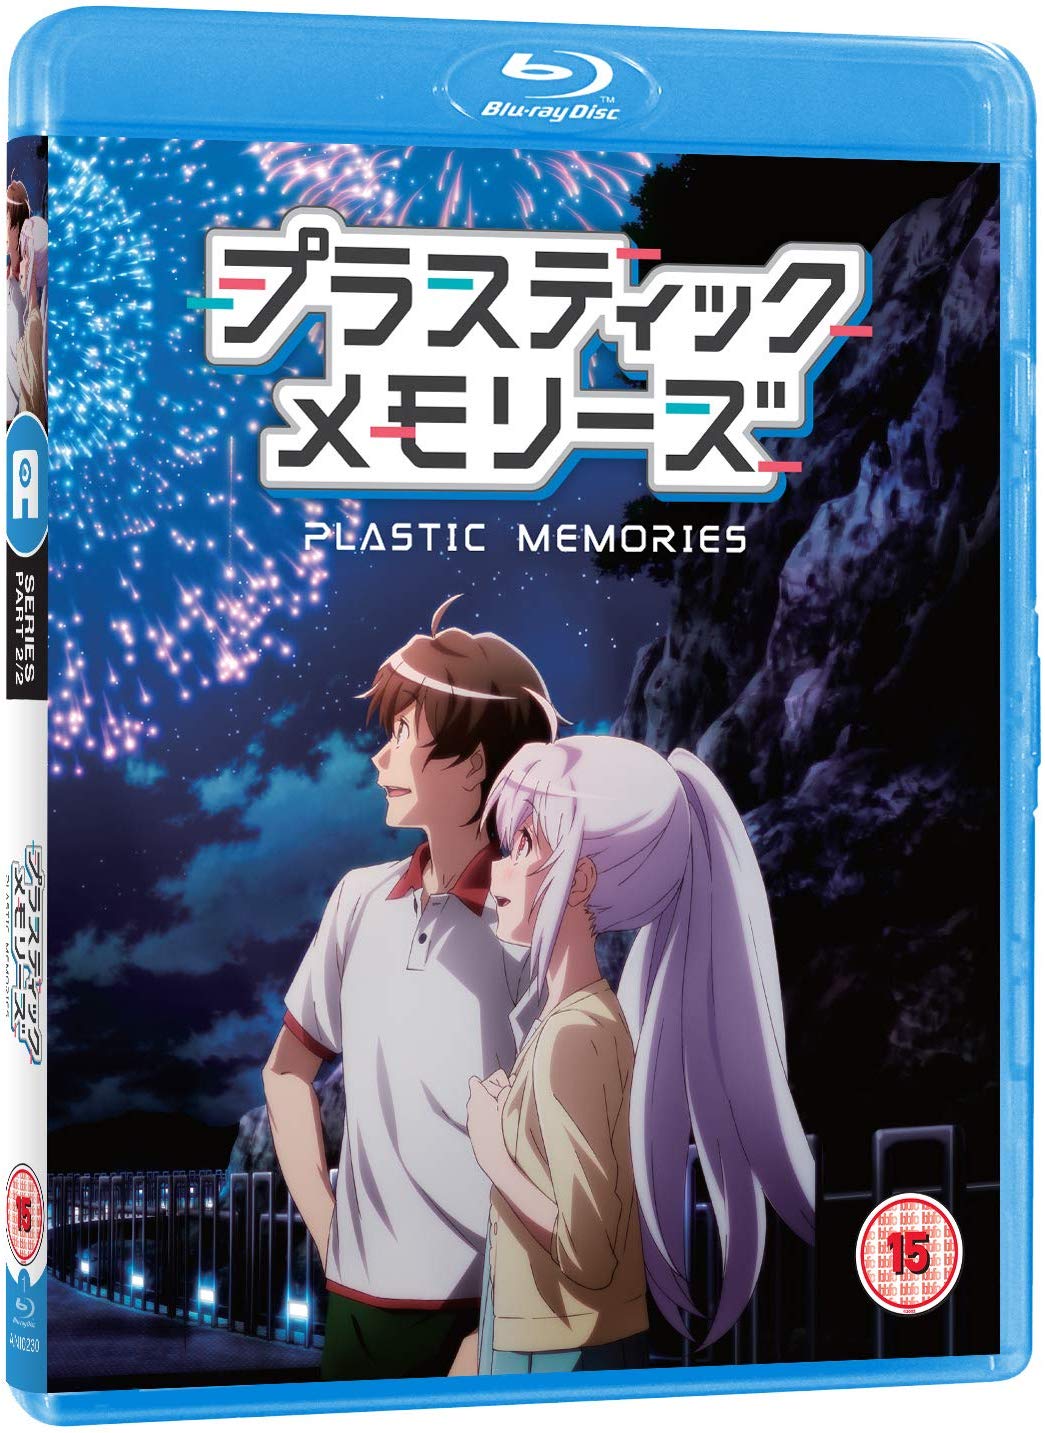 Plastic memories season 2